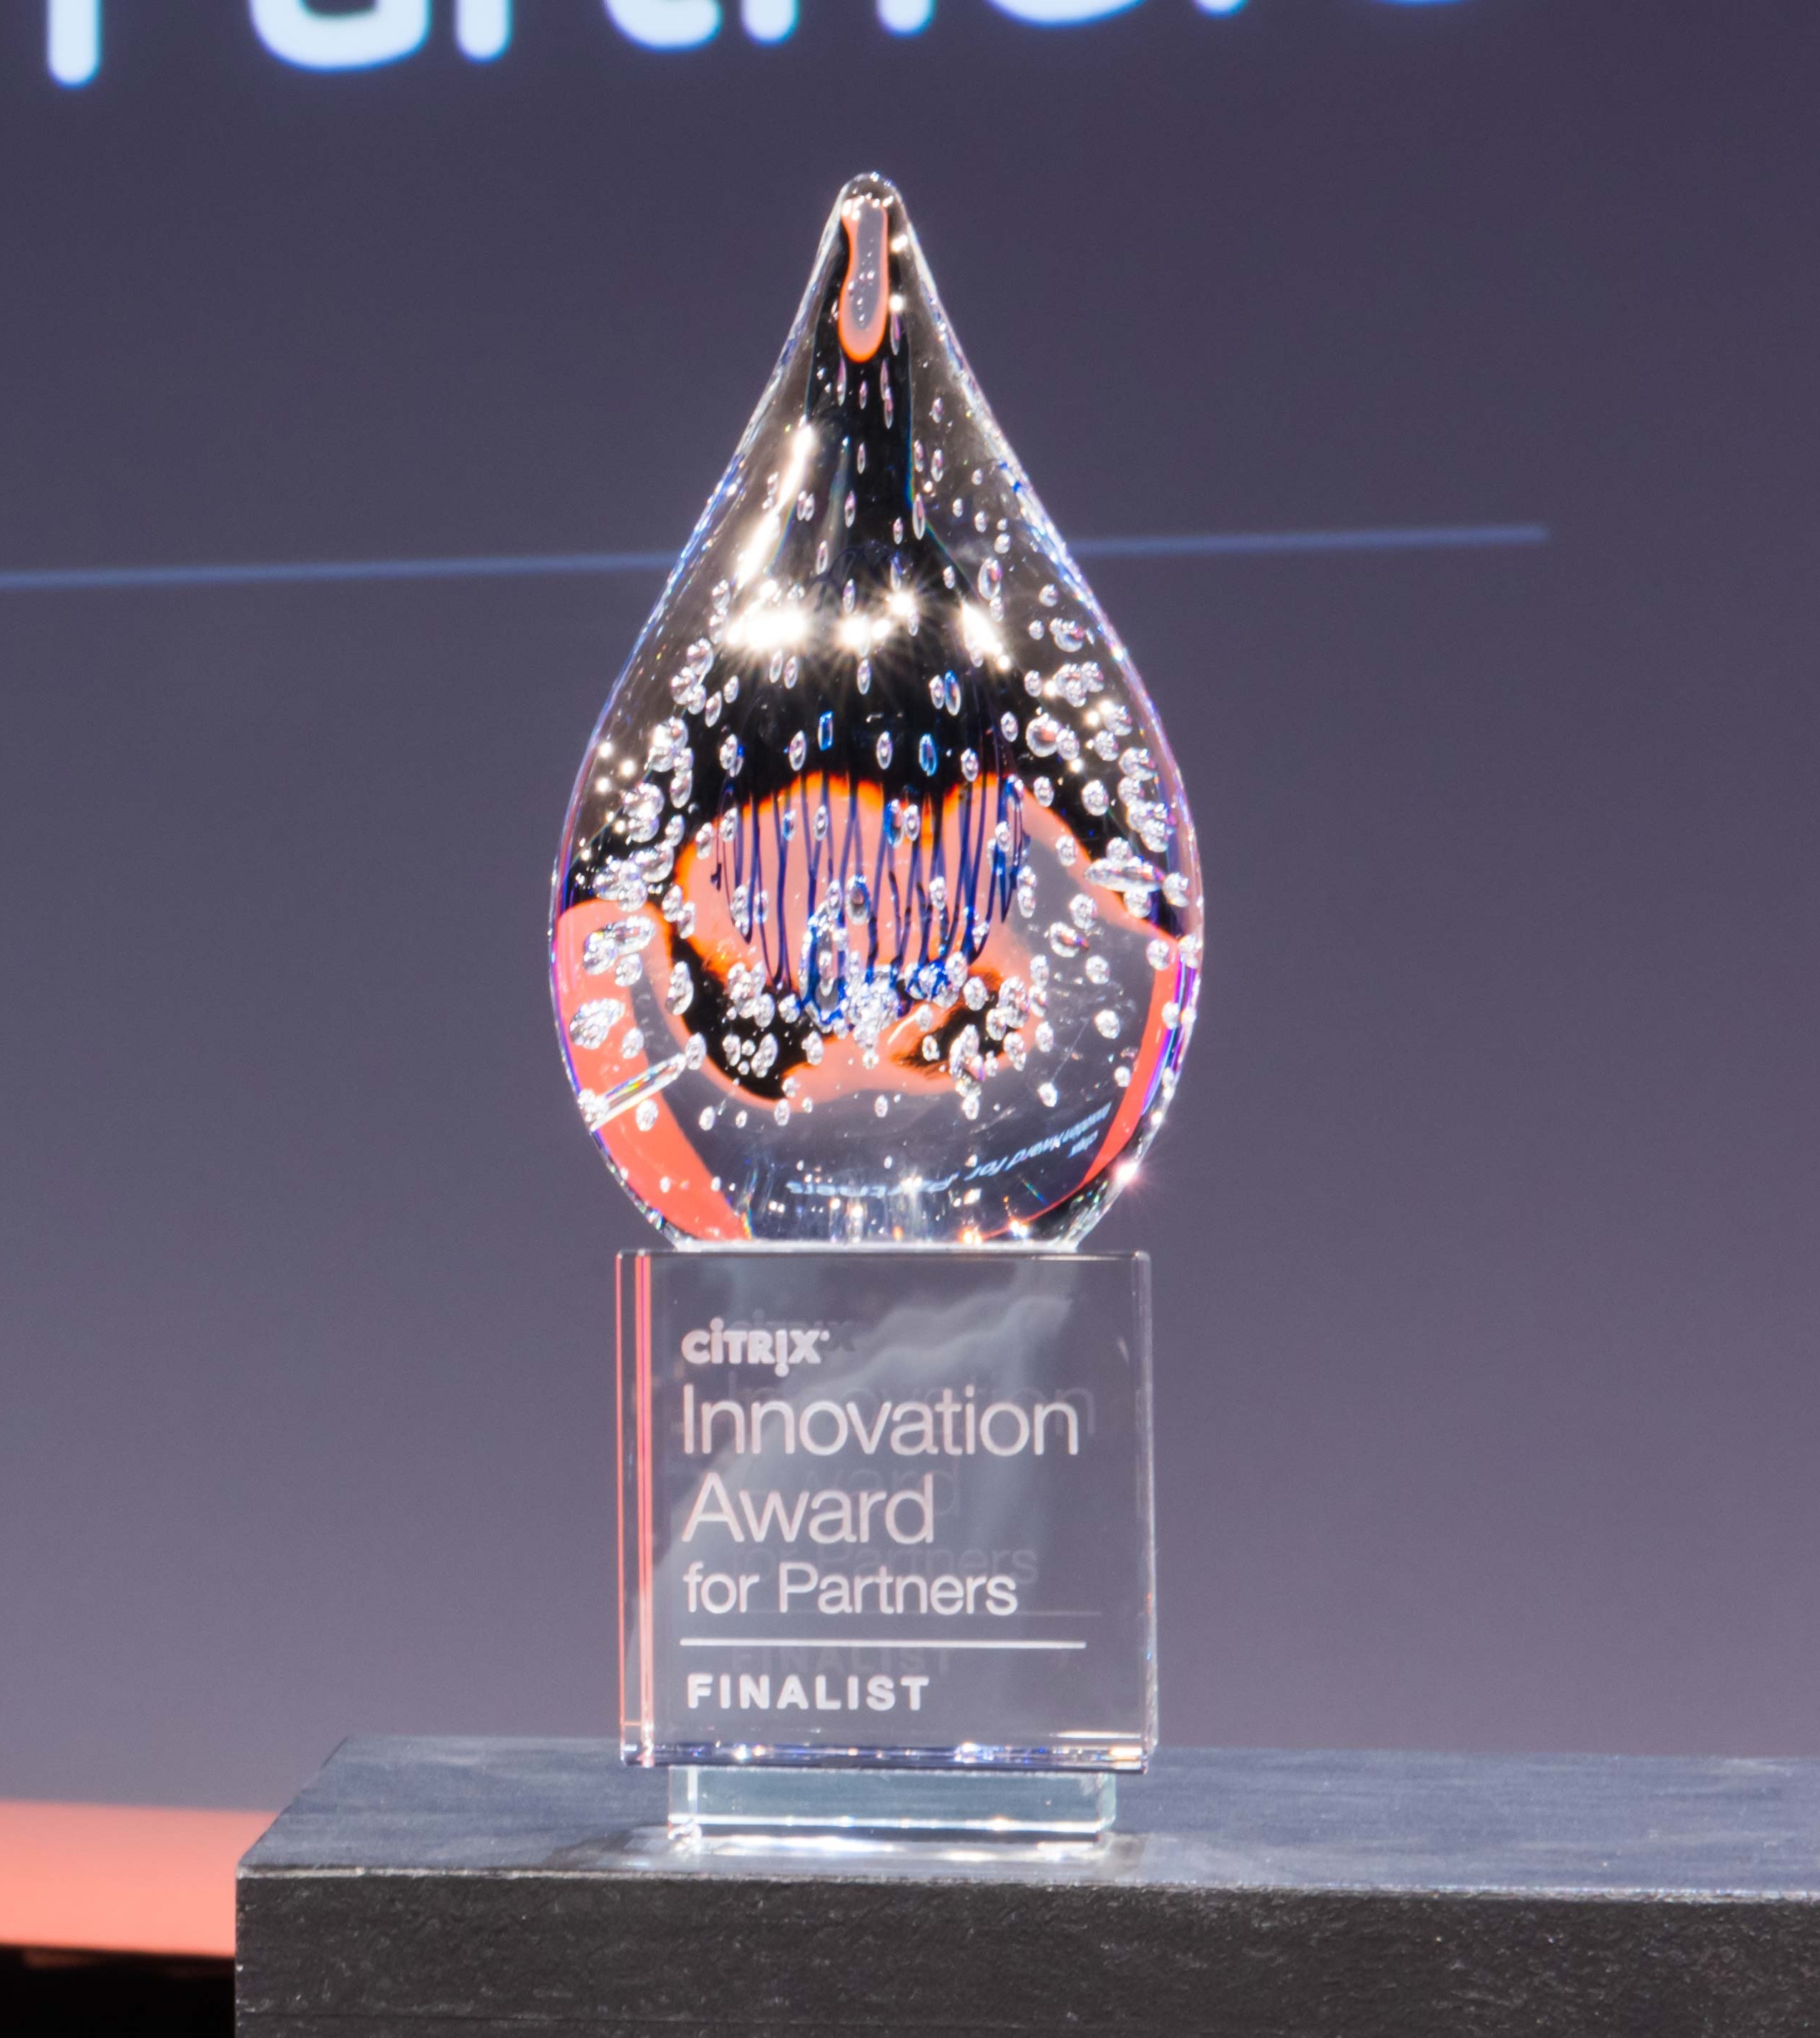 Citrix Innovation Award for Partners